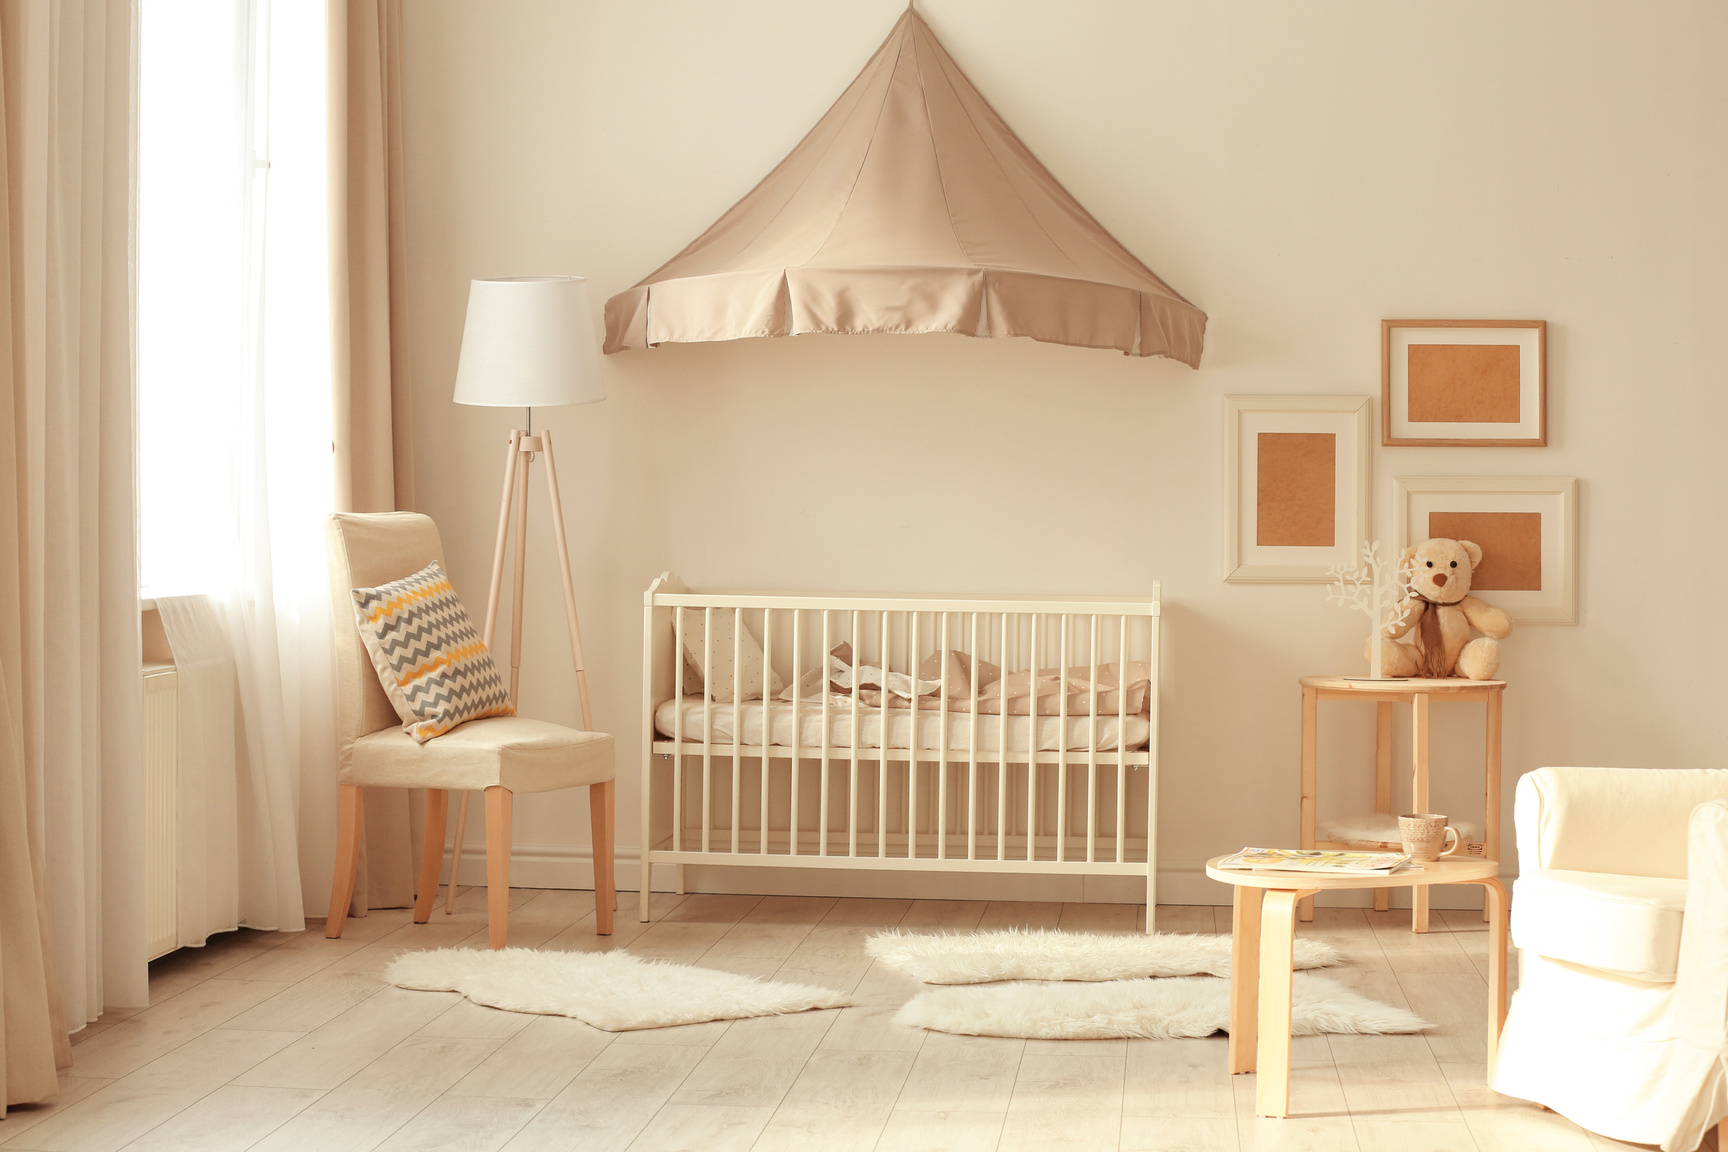 Modern Interior Design of Baby Room